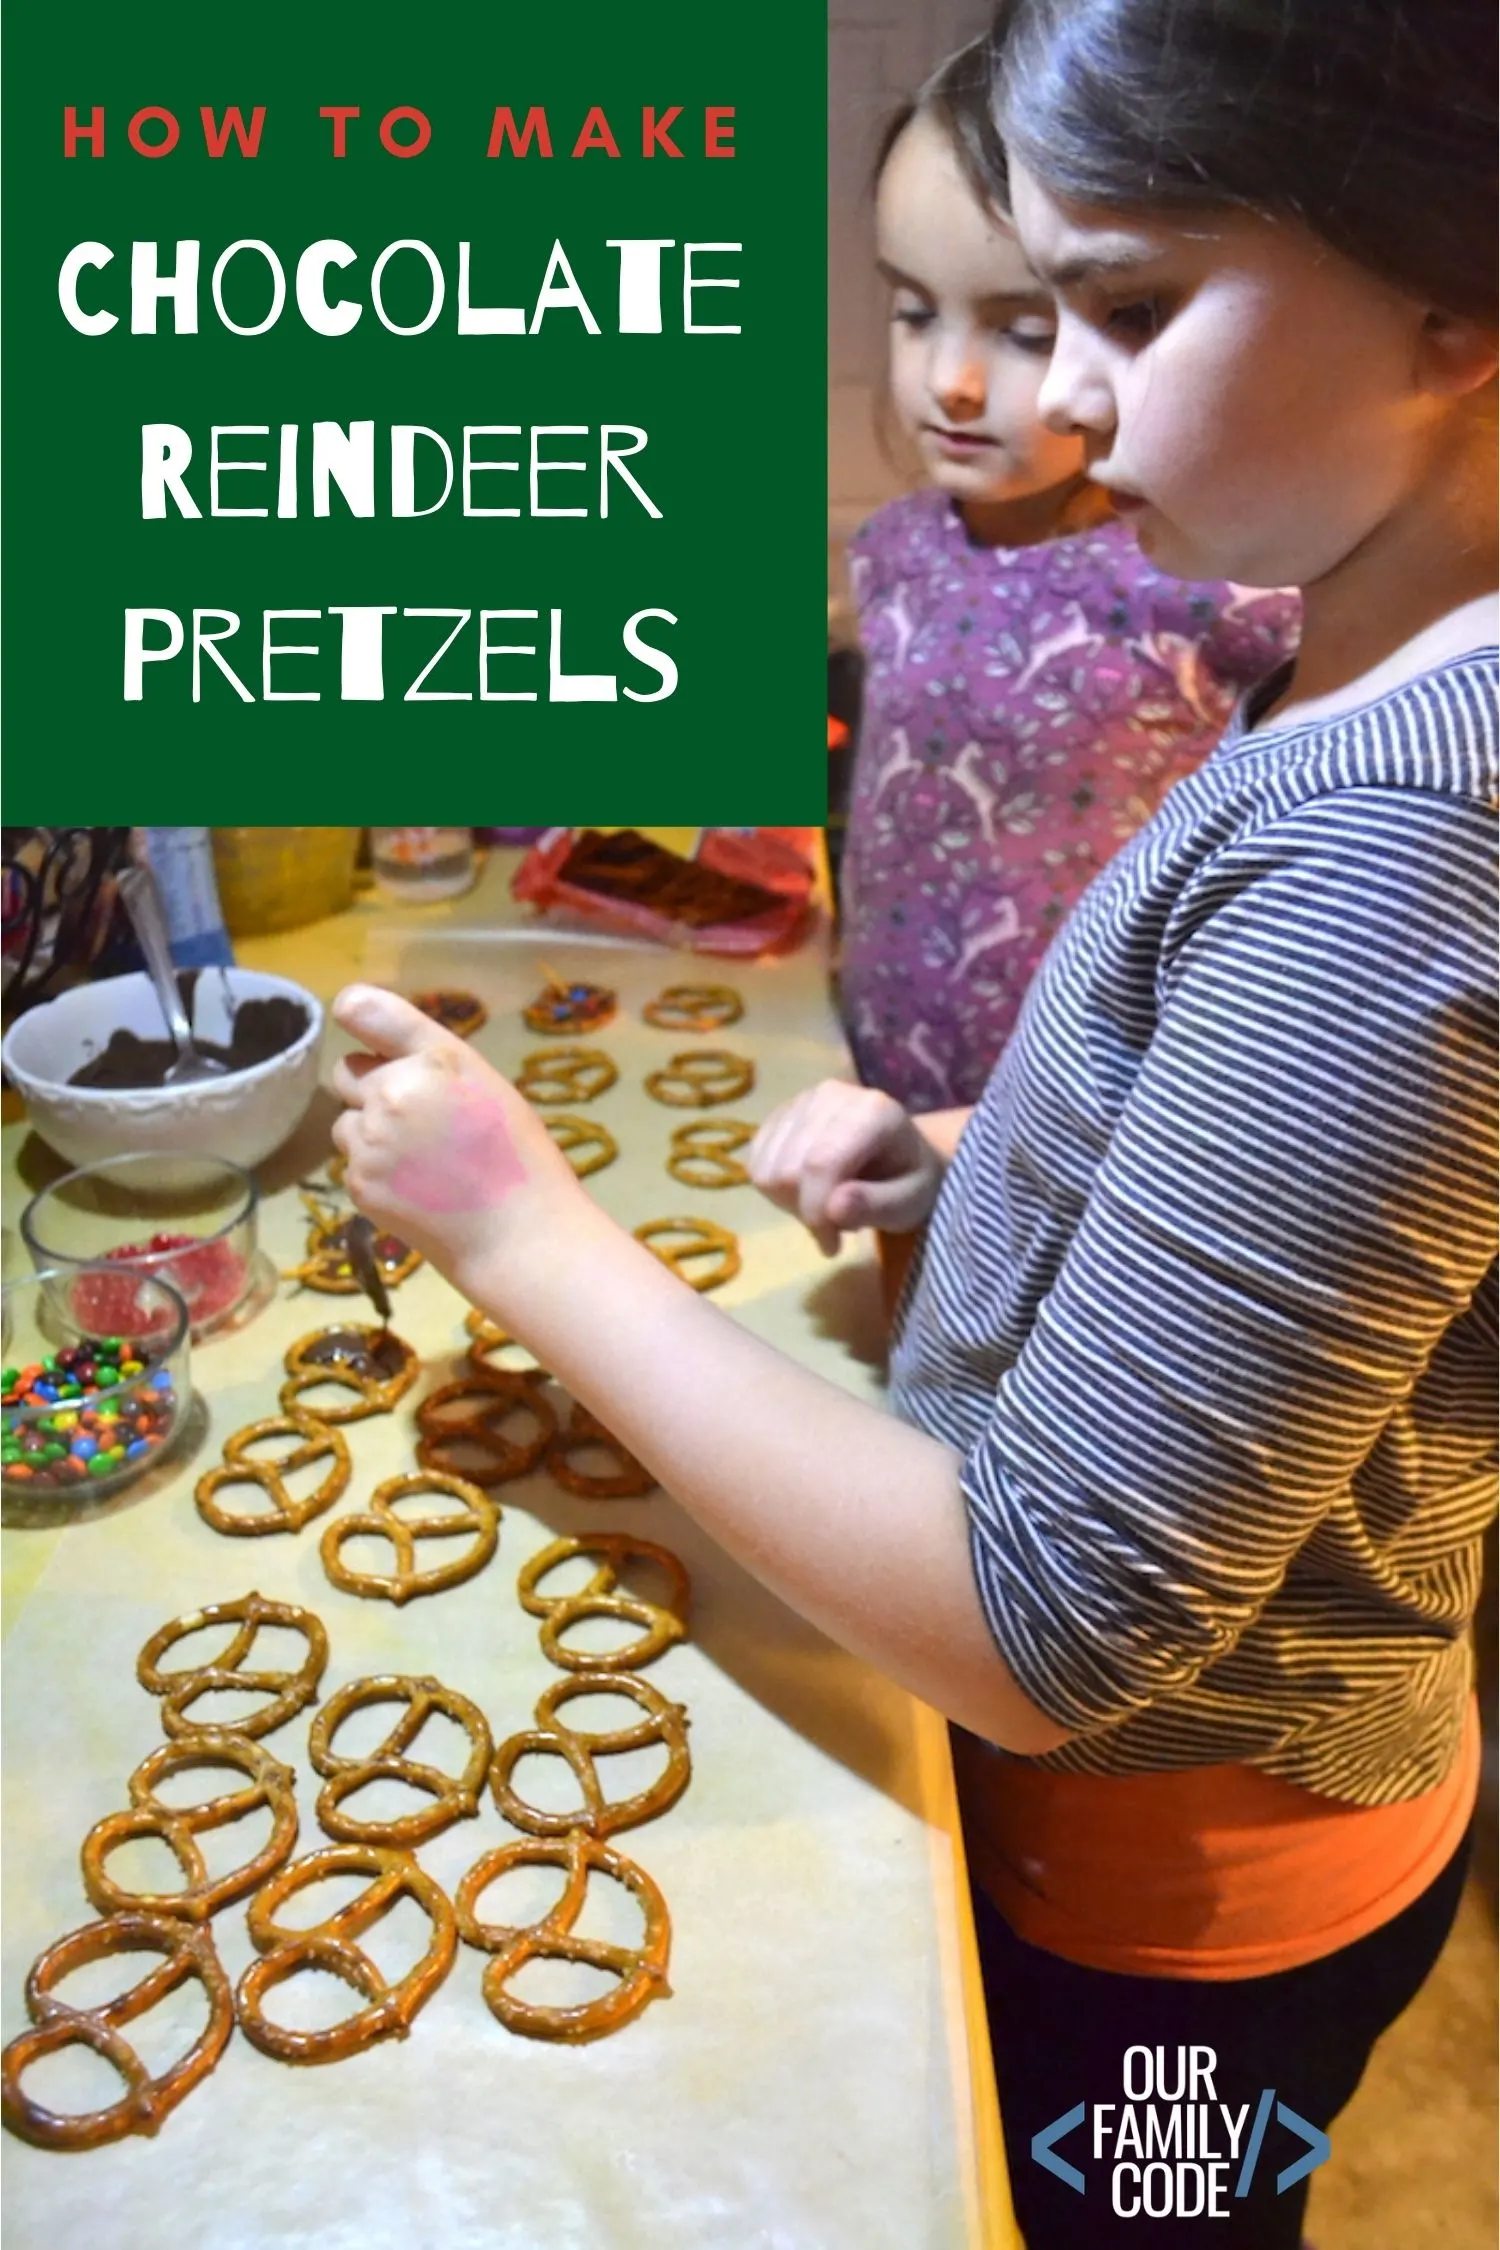 How to Make chocolate reindeer pretzels